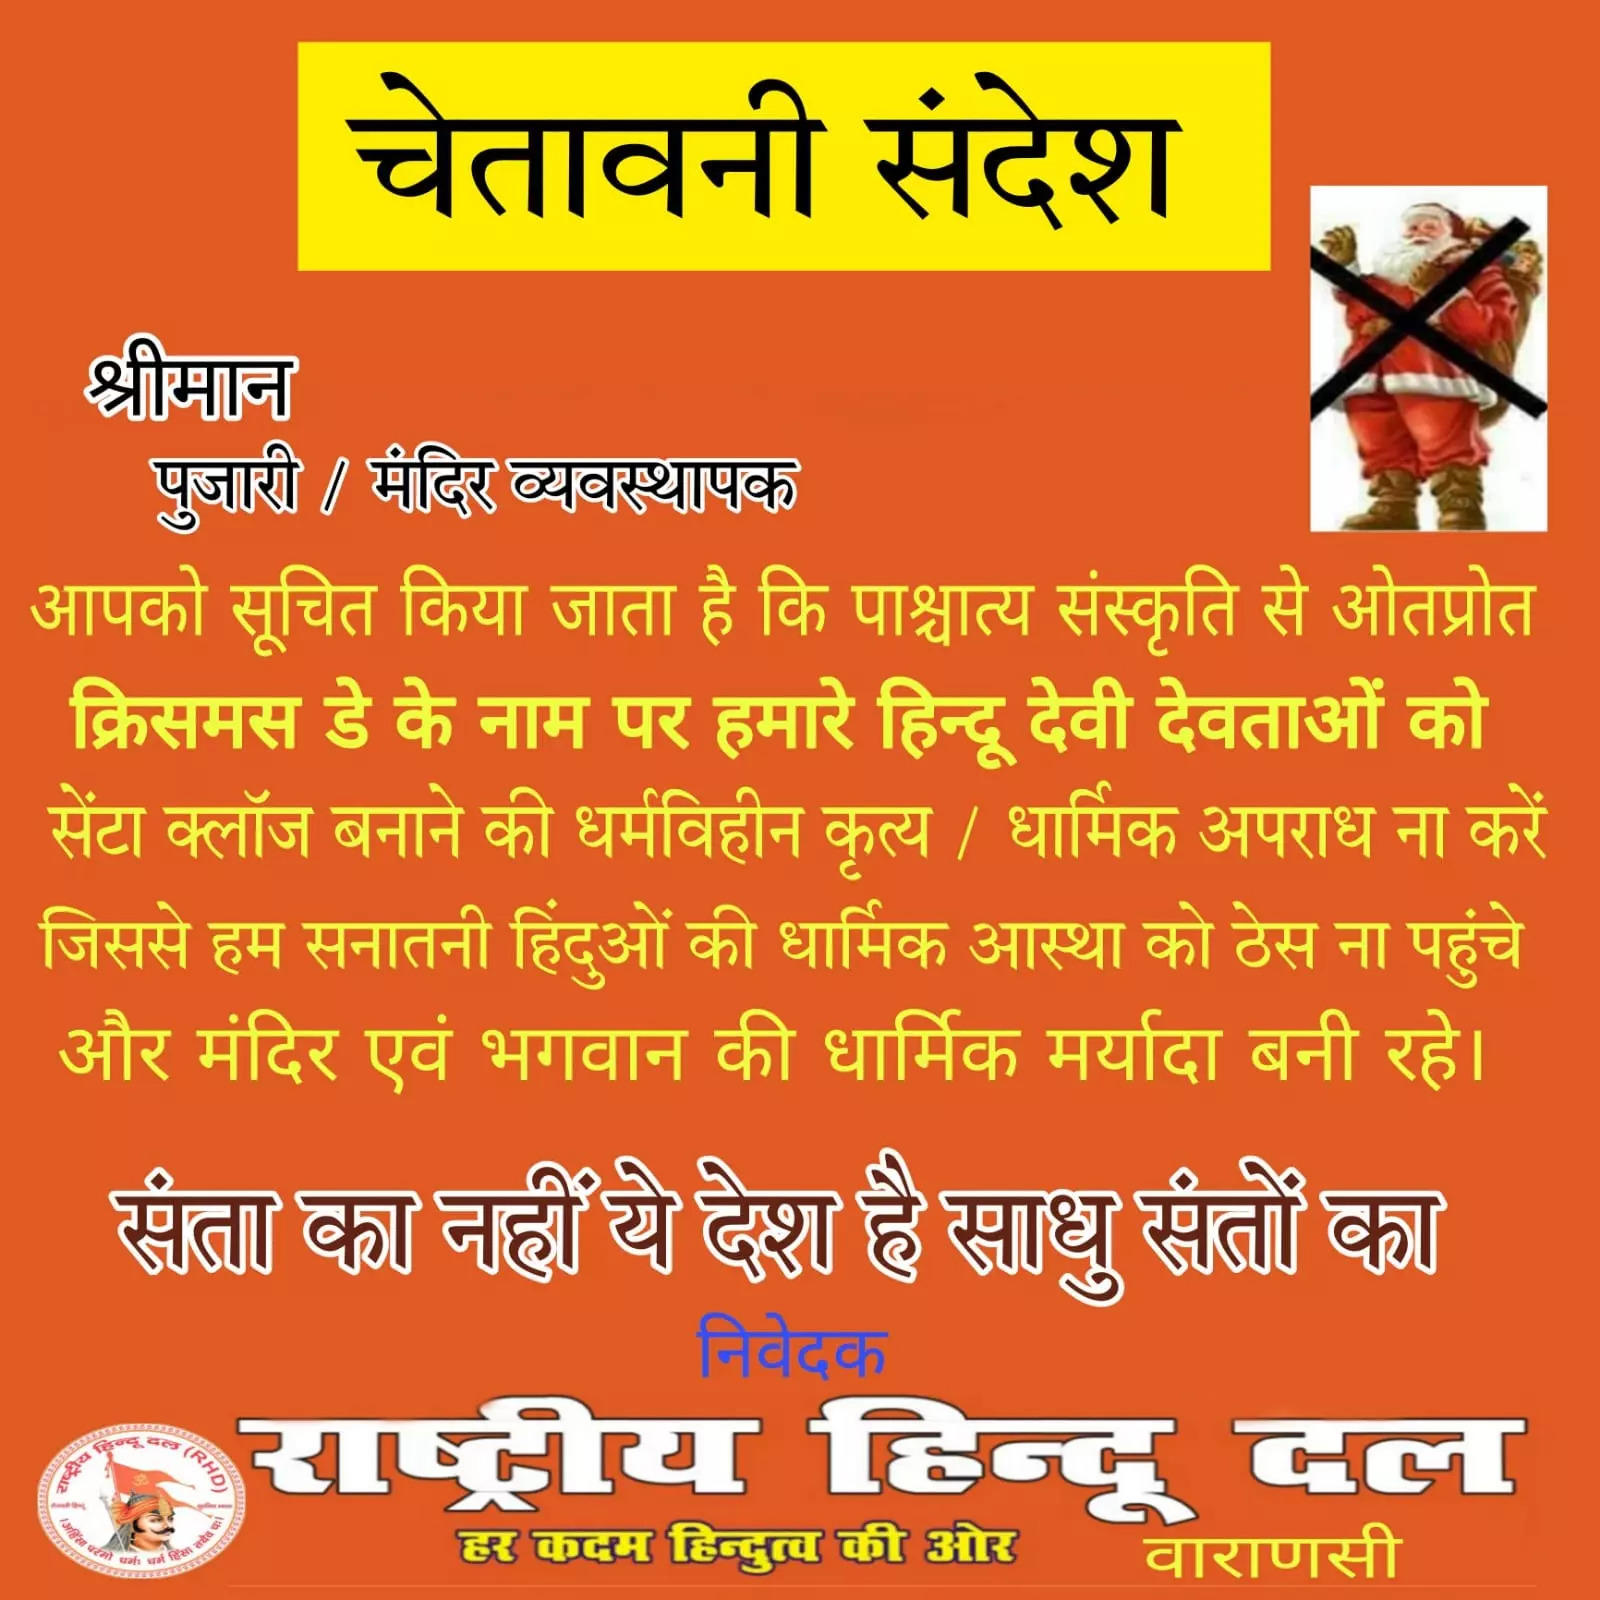 'India belongs to sadhus, not saints', posters in Varanasi warn against ...